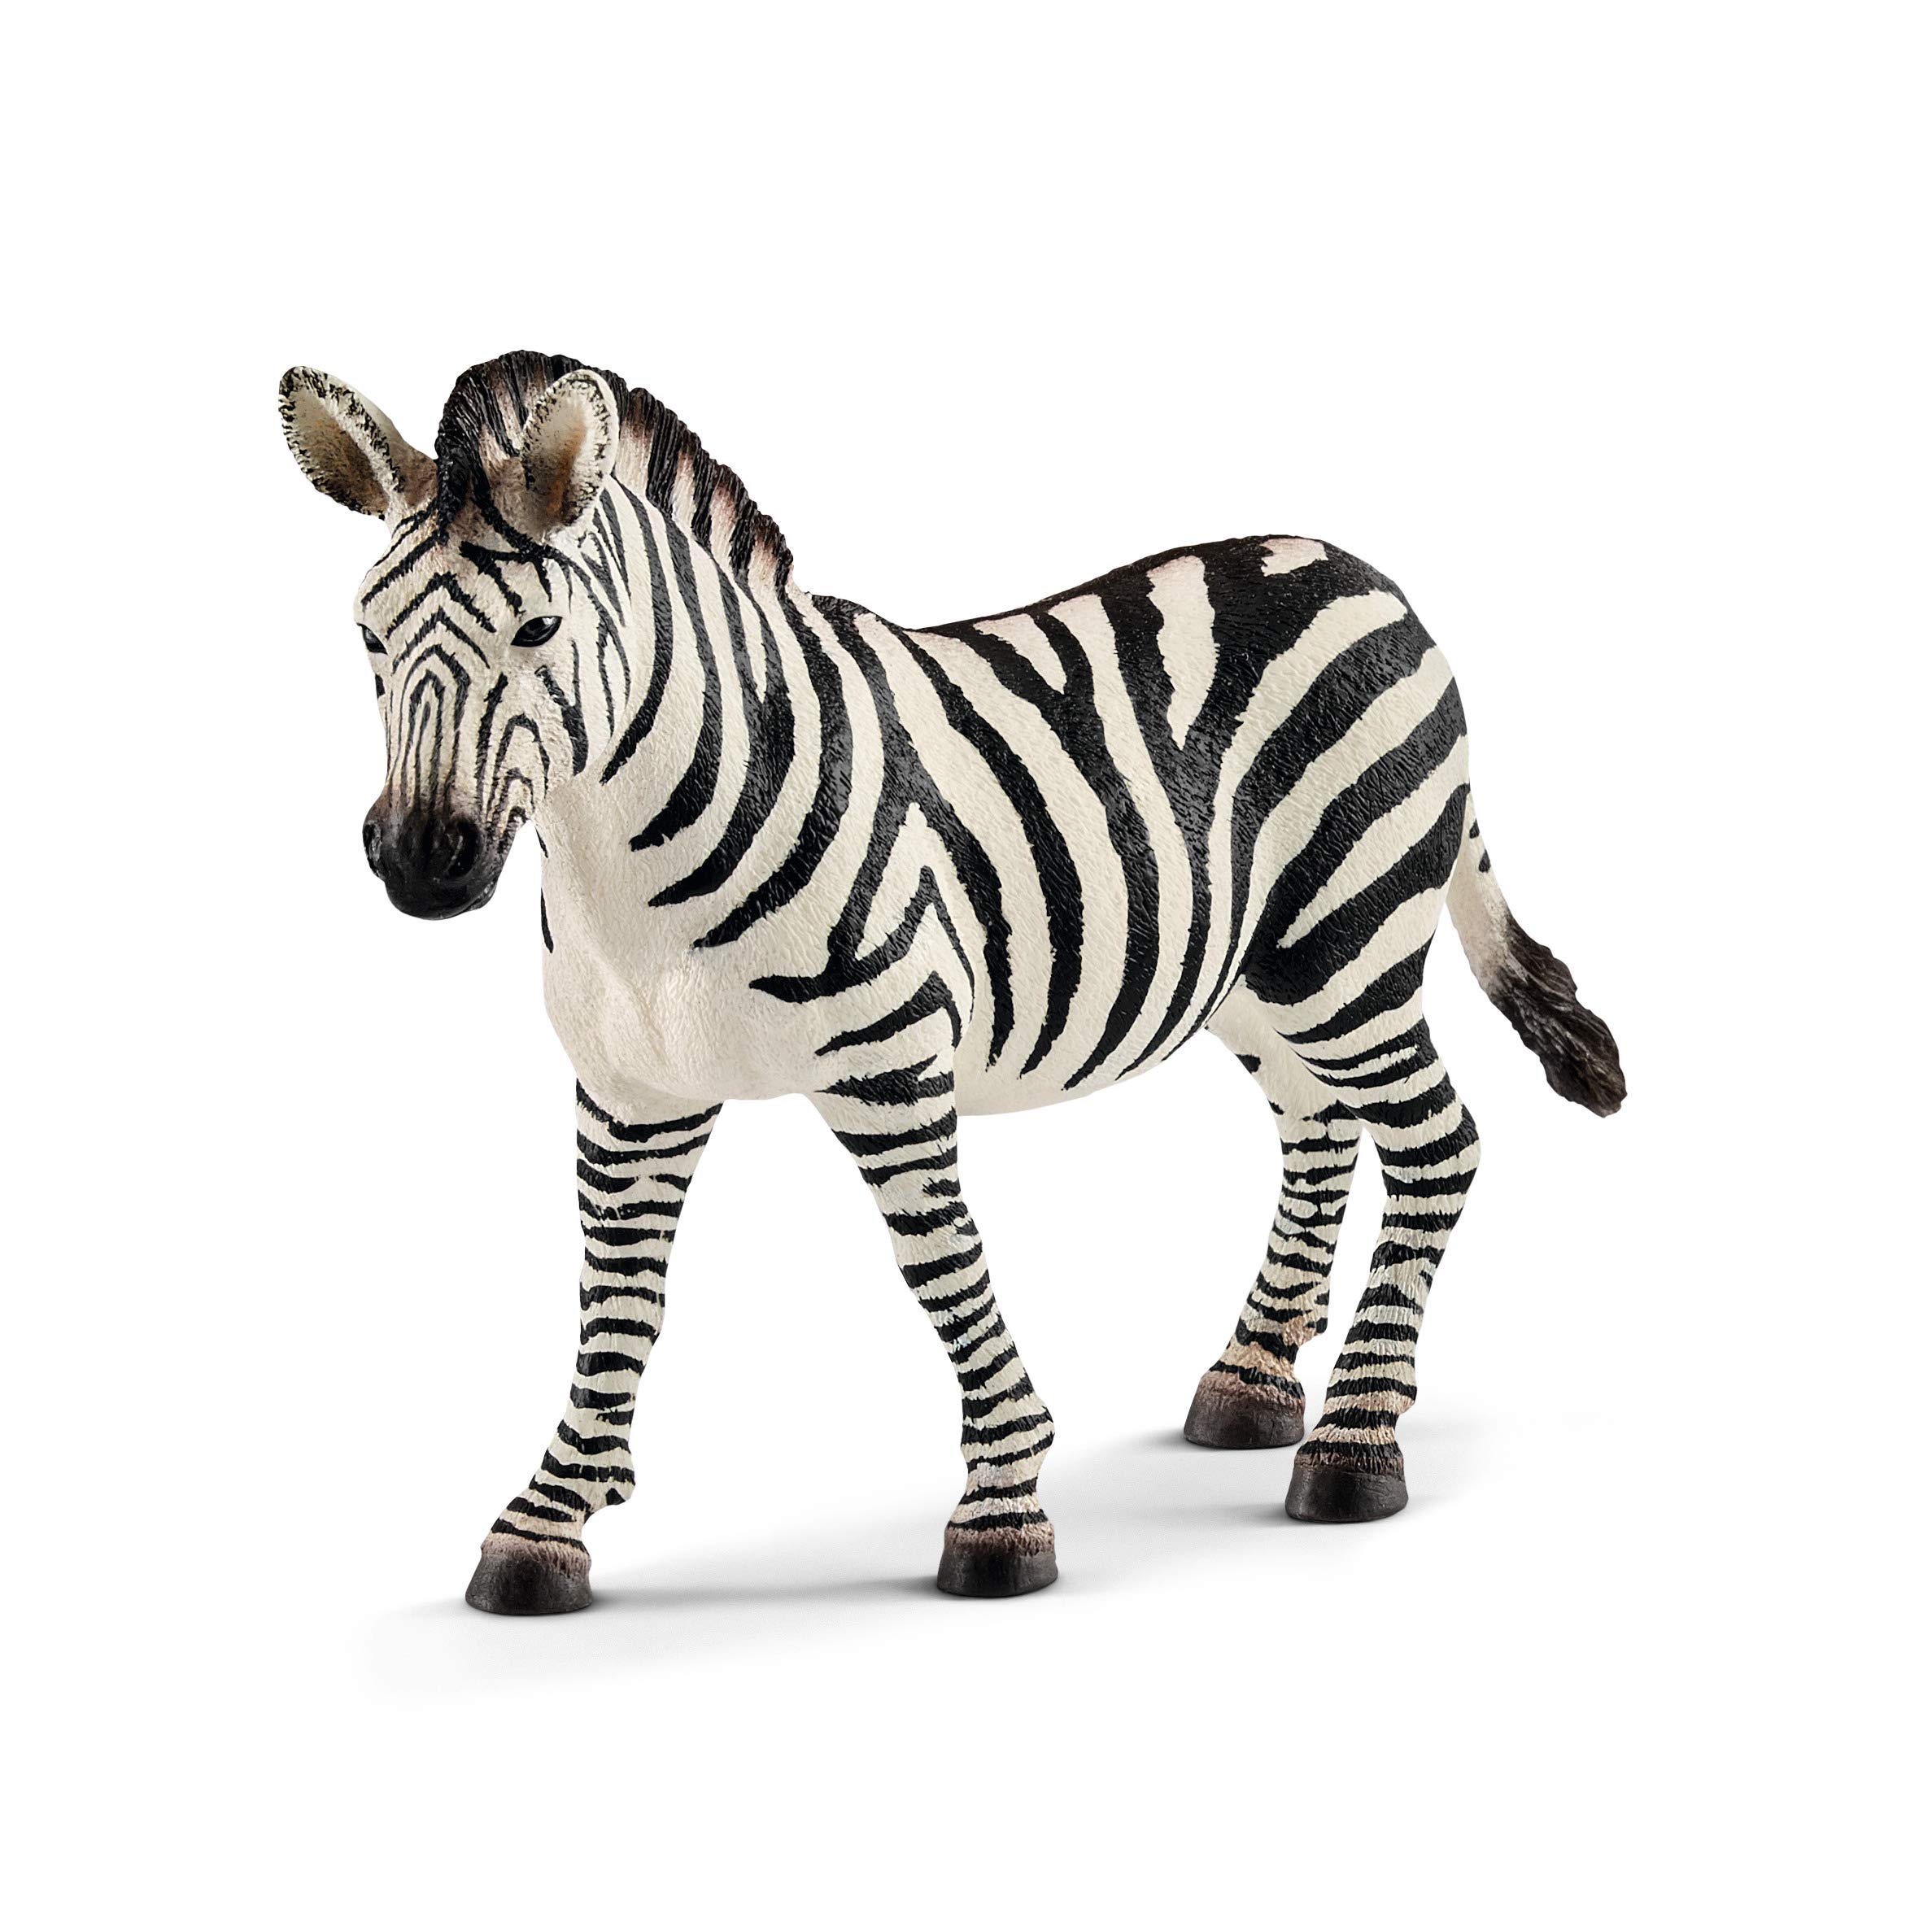 Animale Schleich giovane femmina di Zebra